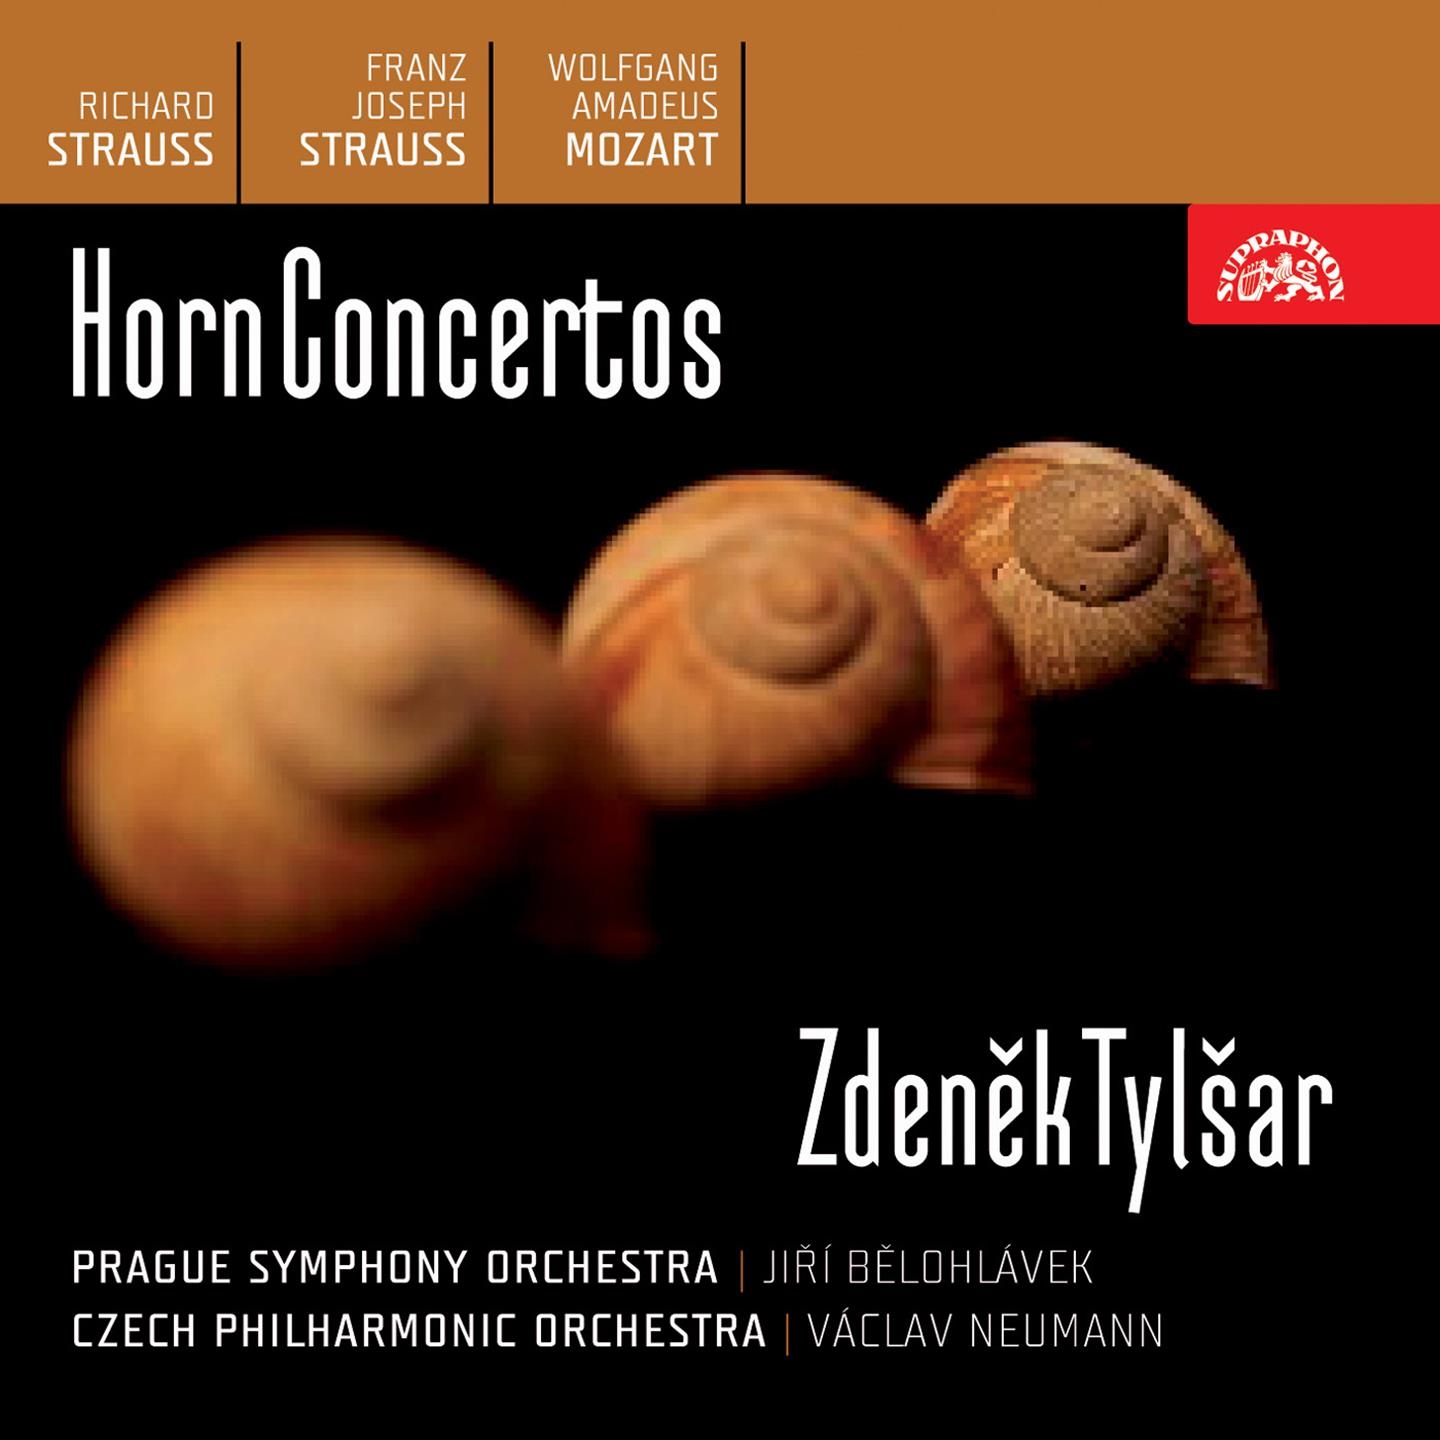 Concerto for French Horn and Orchestra No. 2 in E-Flat Major, .: II. Andante con moto /att./